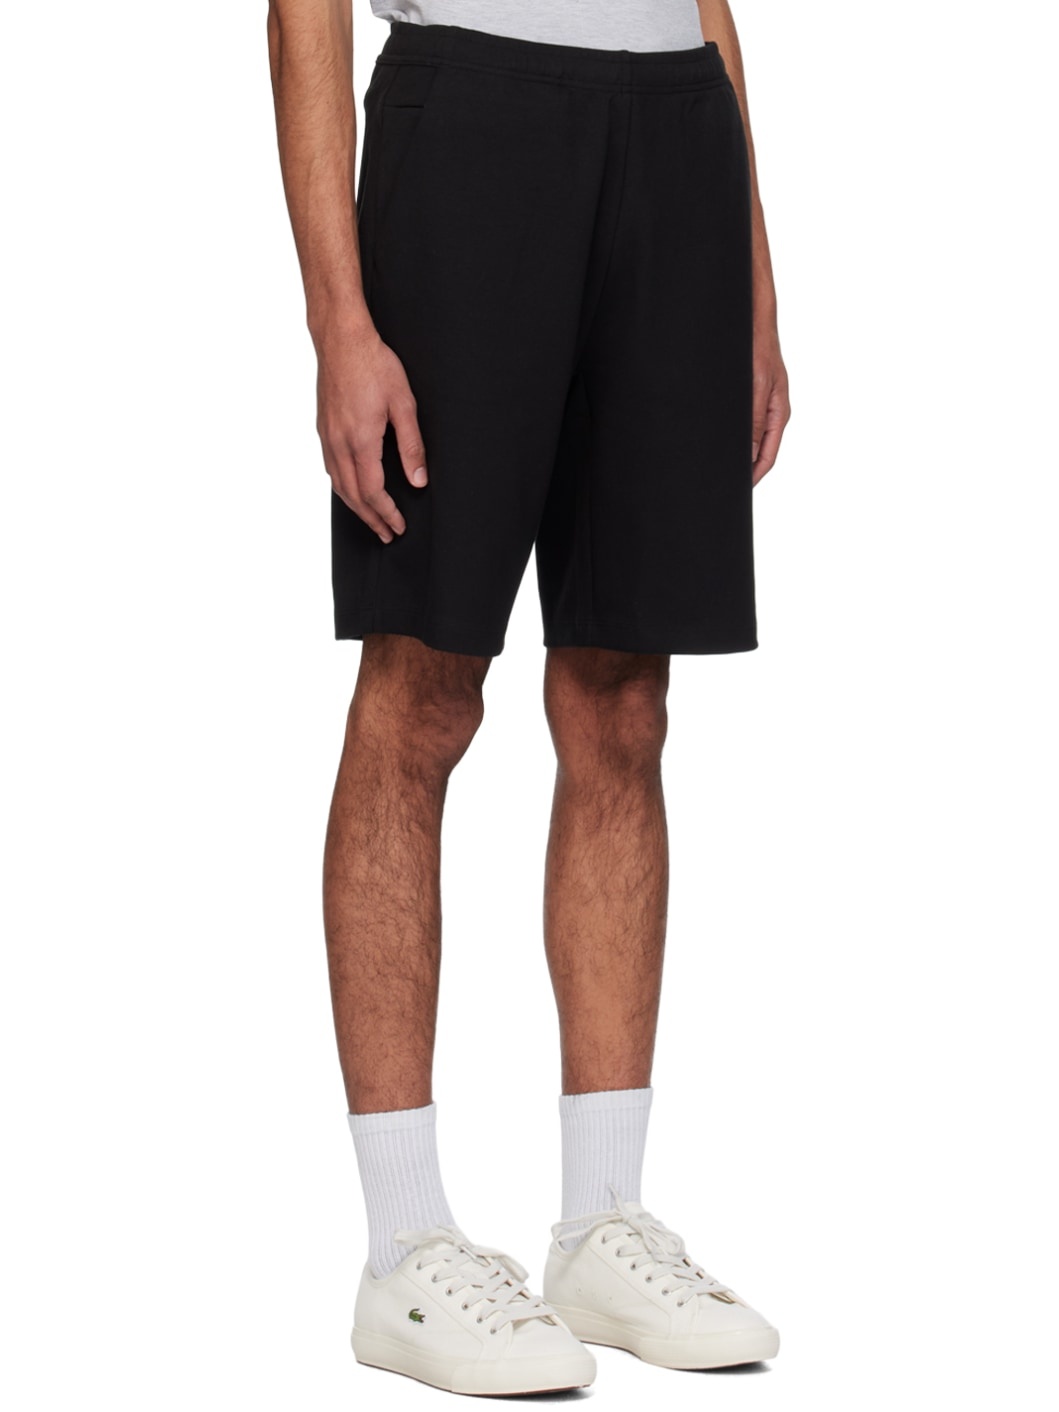 Black Patch Shorts - 2